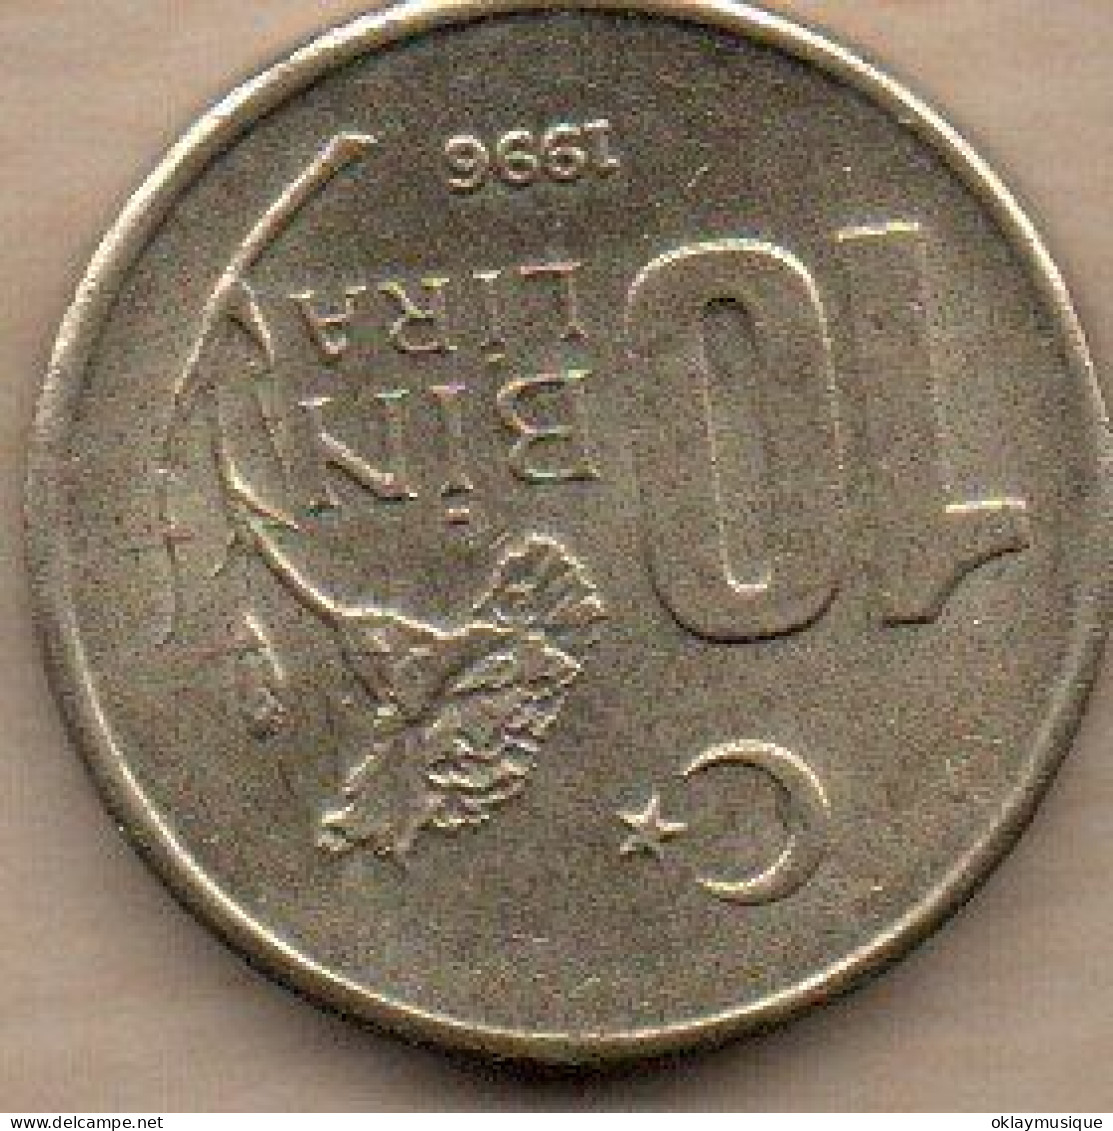 10 Lira 1996 - Turkey